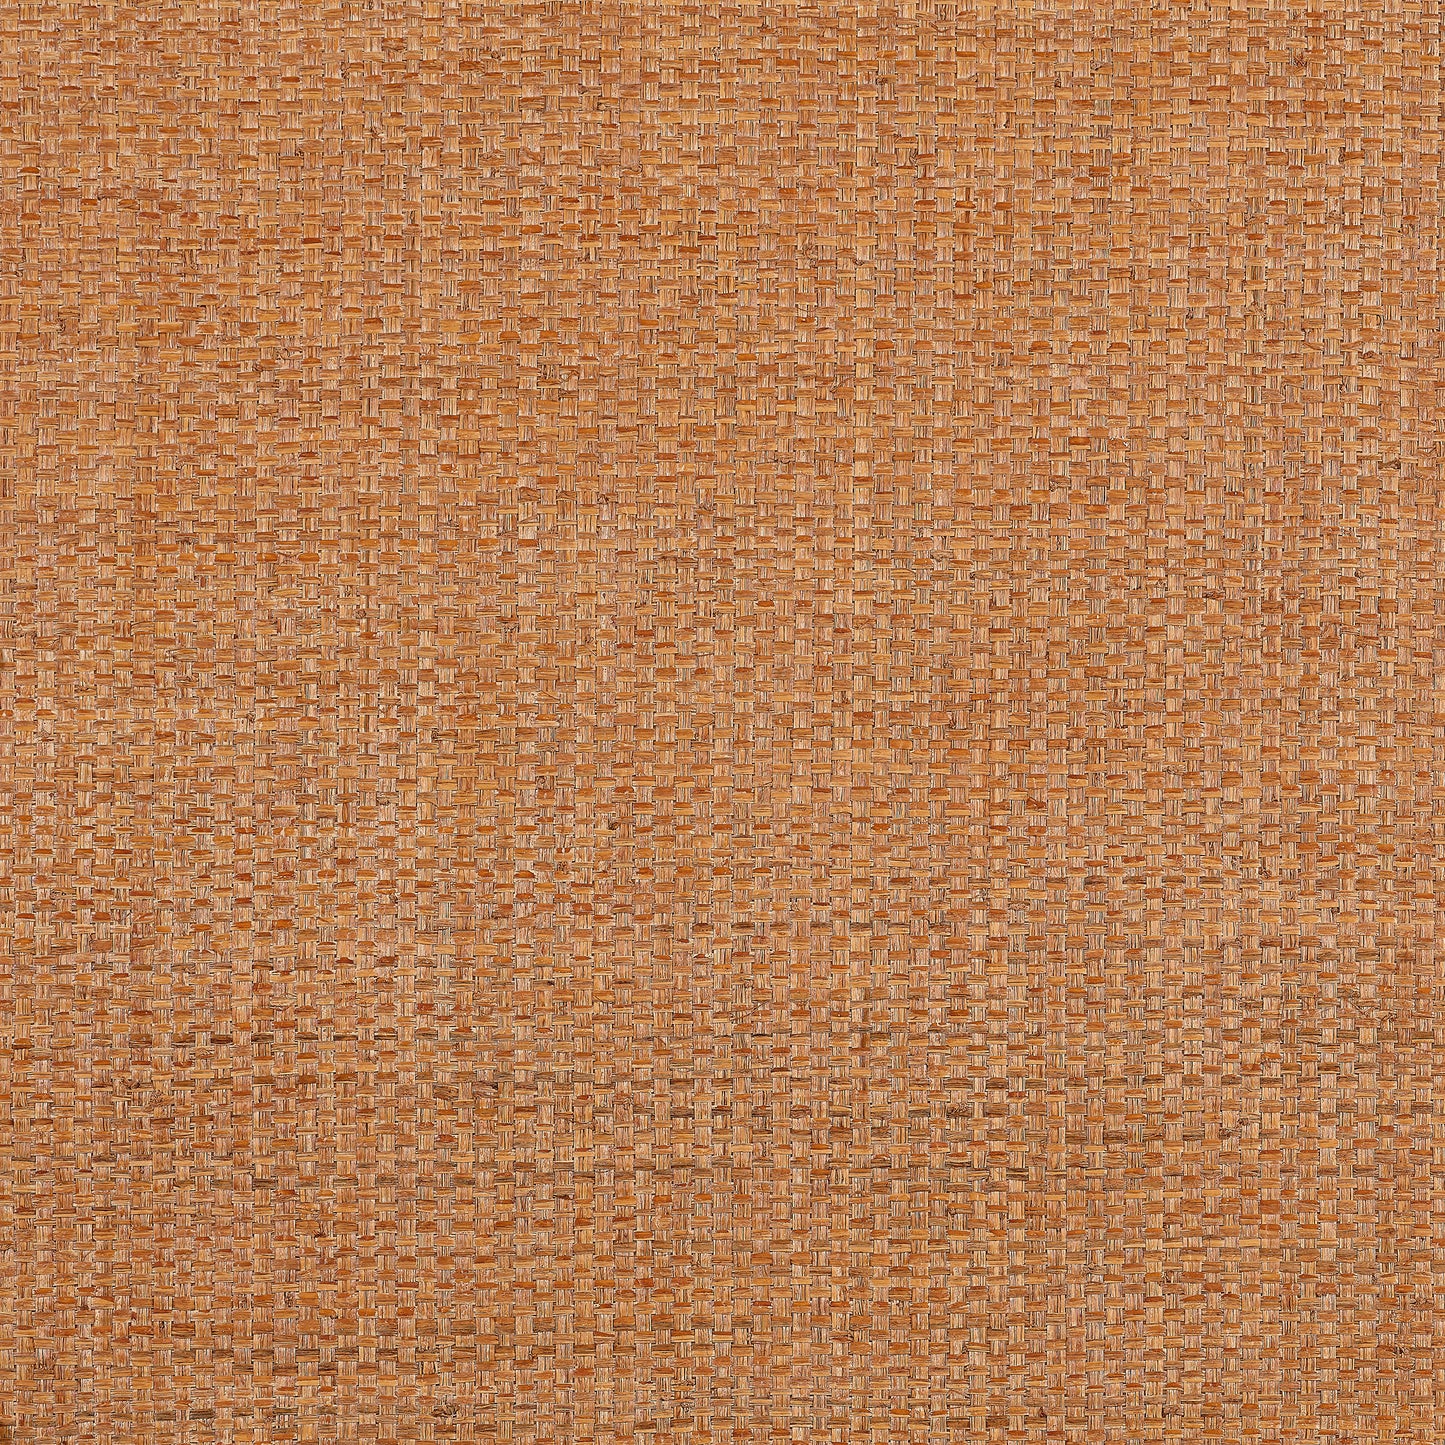 Purchase Thibaut Wallpaper Pattern number T19606 pattern name Lauderdale color Pumpkin. 